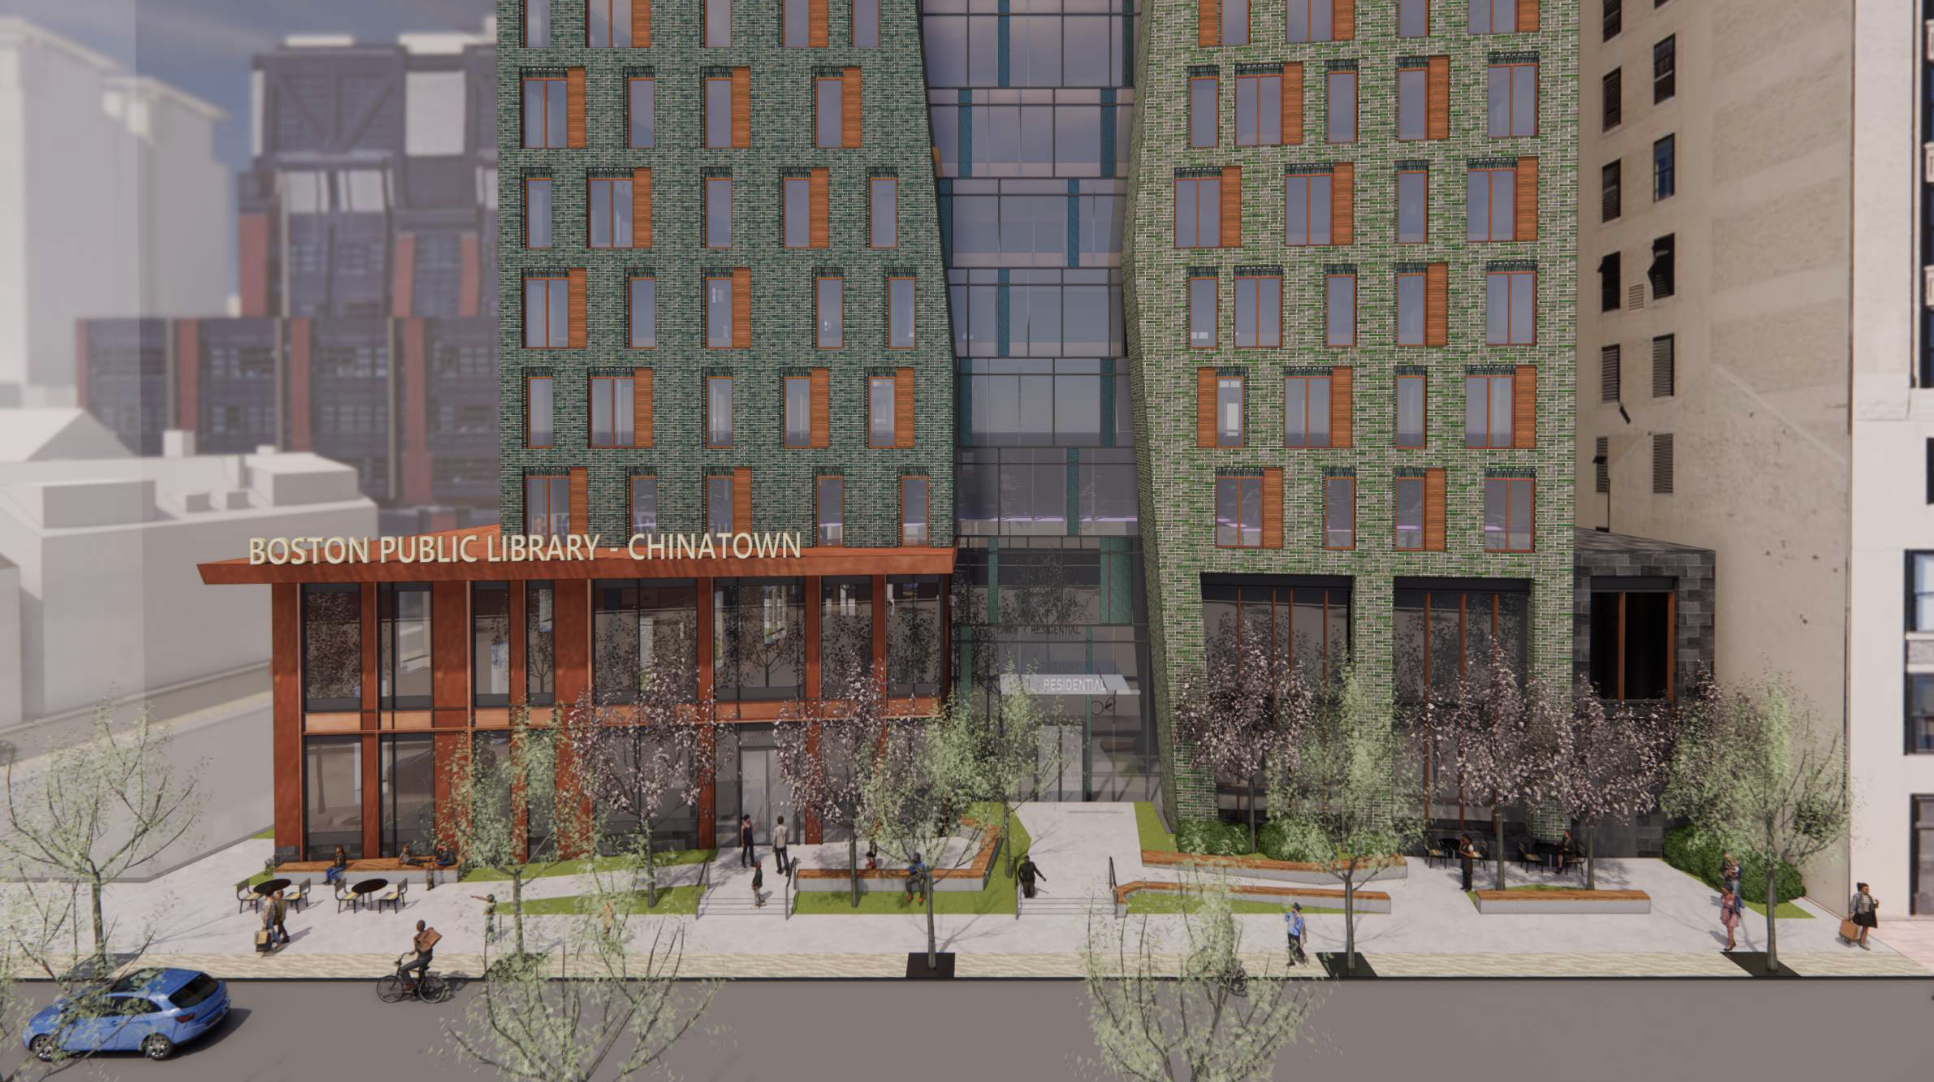 Most Metro Boston Residential Developments Overbuild Off-Street Parking